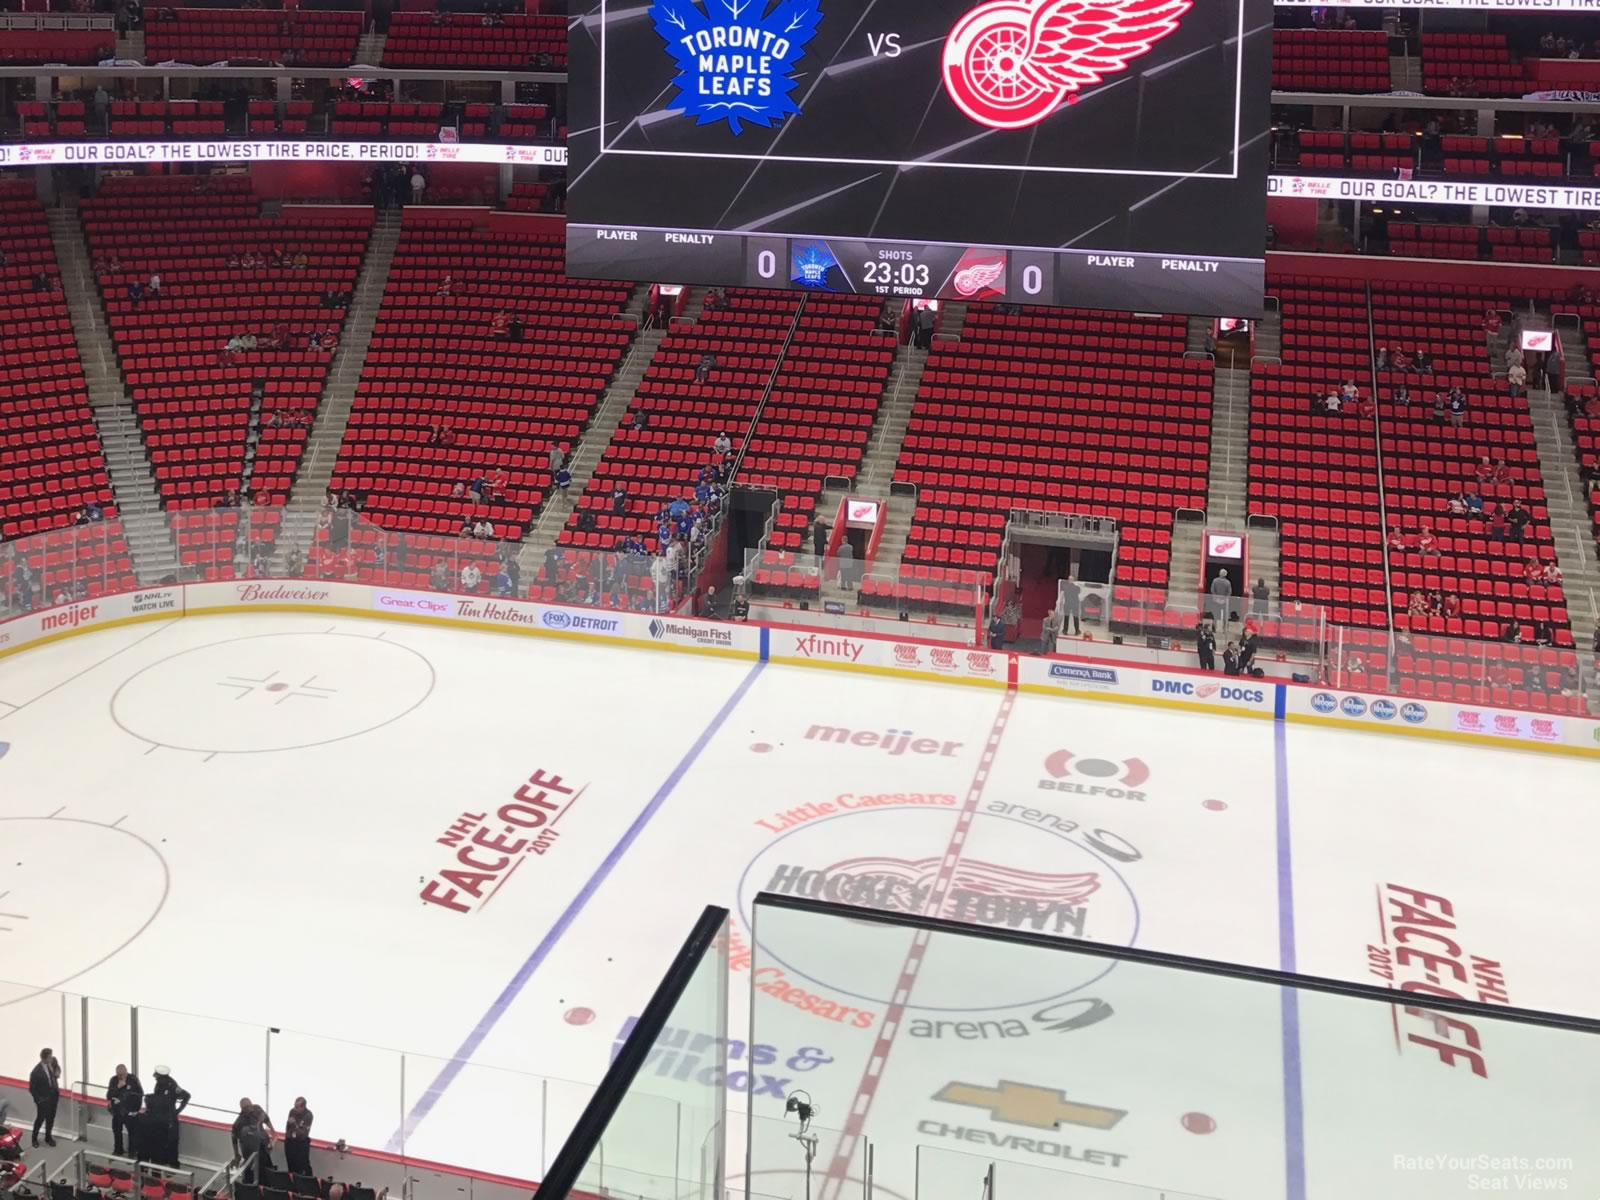 mezzanine 11, row 4 seat view  for hockey - little caesars arena